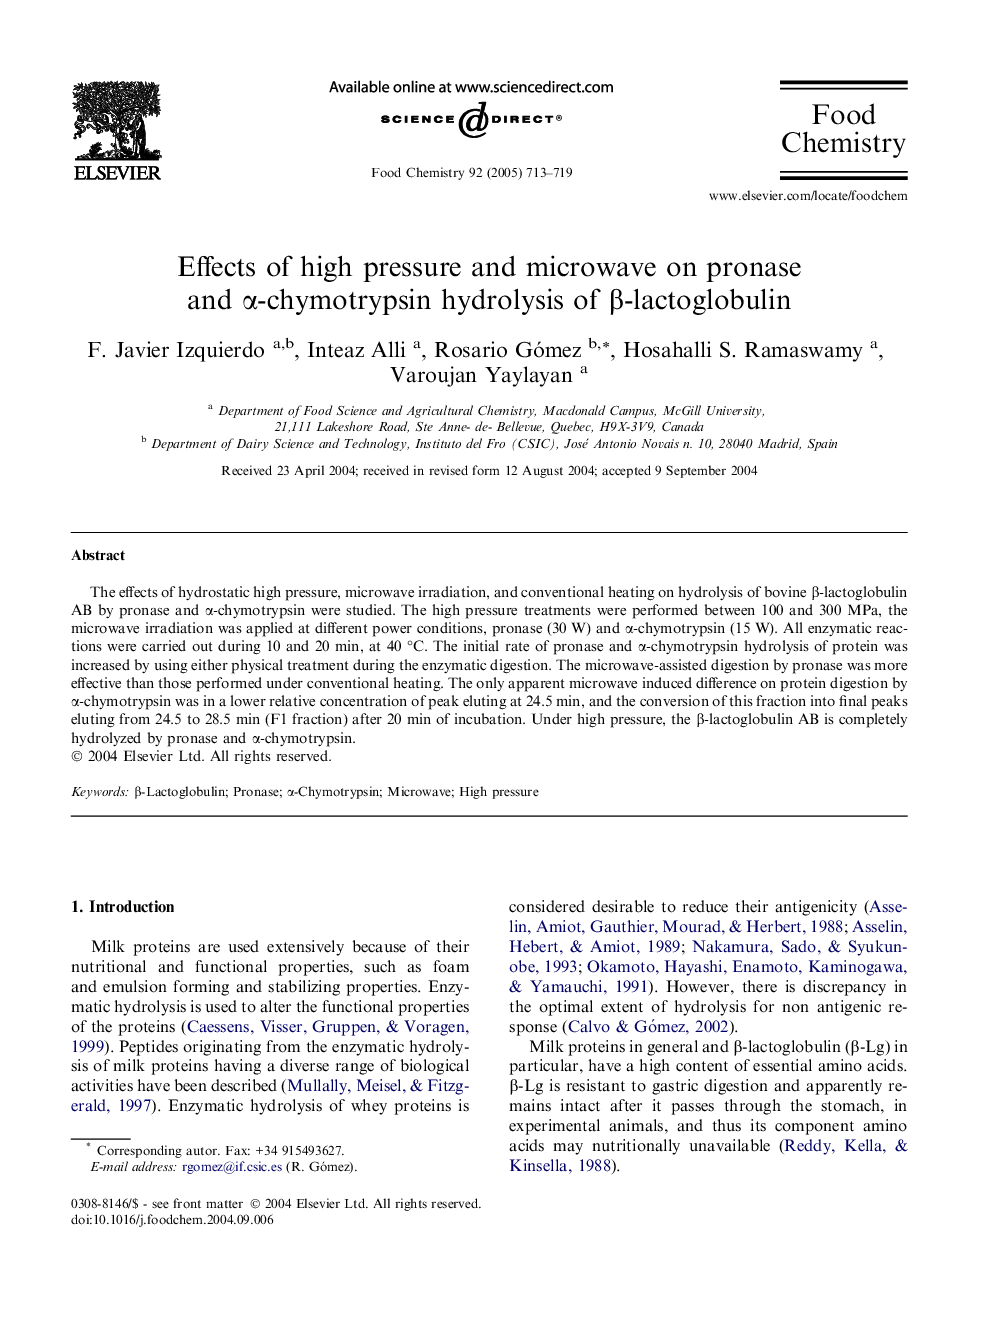 Effects of high pressure and microwave on pronase and Î±-chymotrypsin hydrolysis of Î²-lactoglobulin